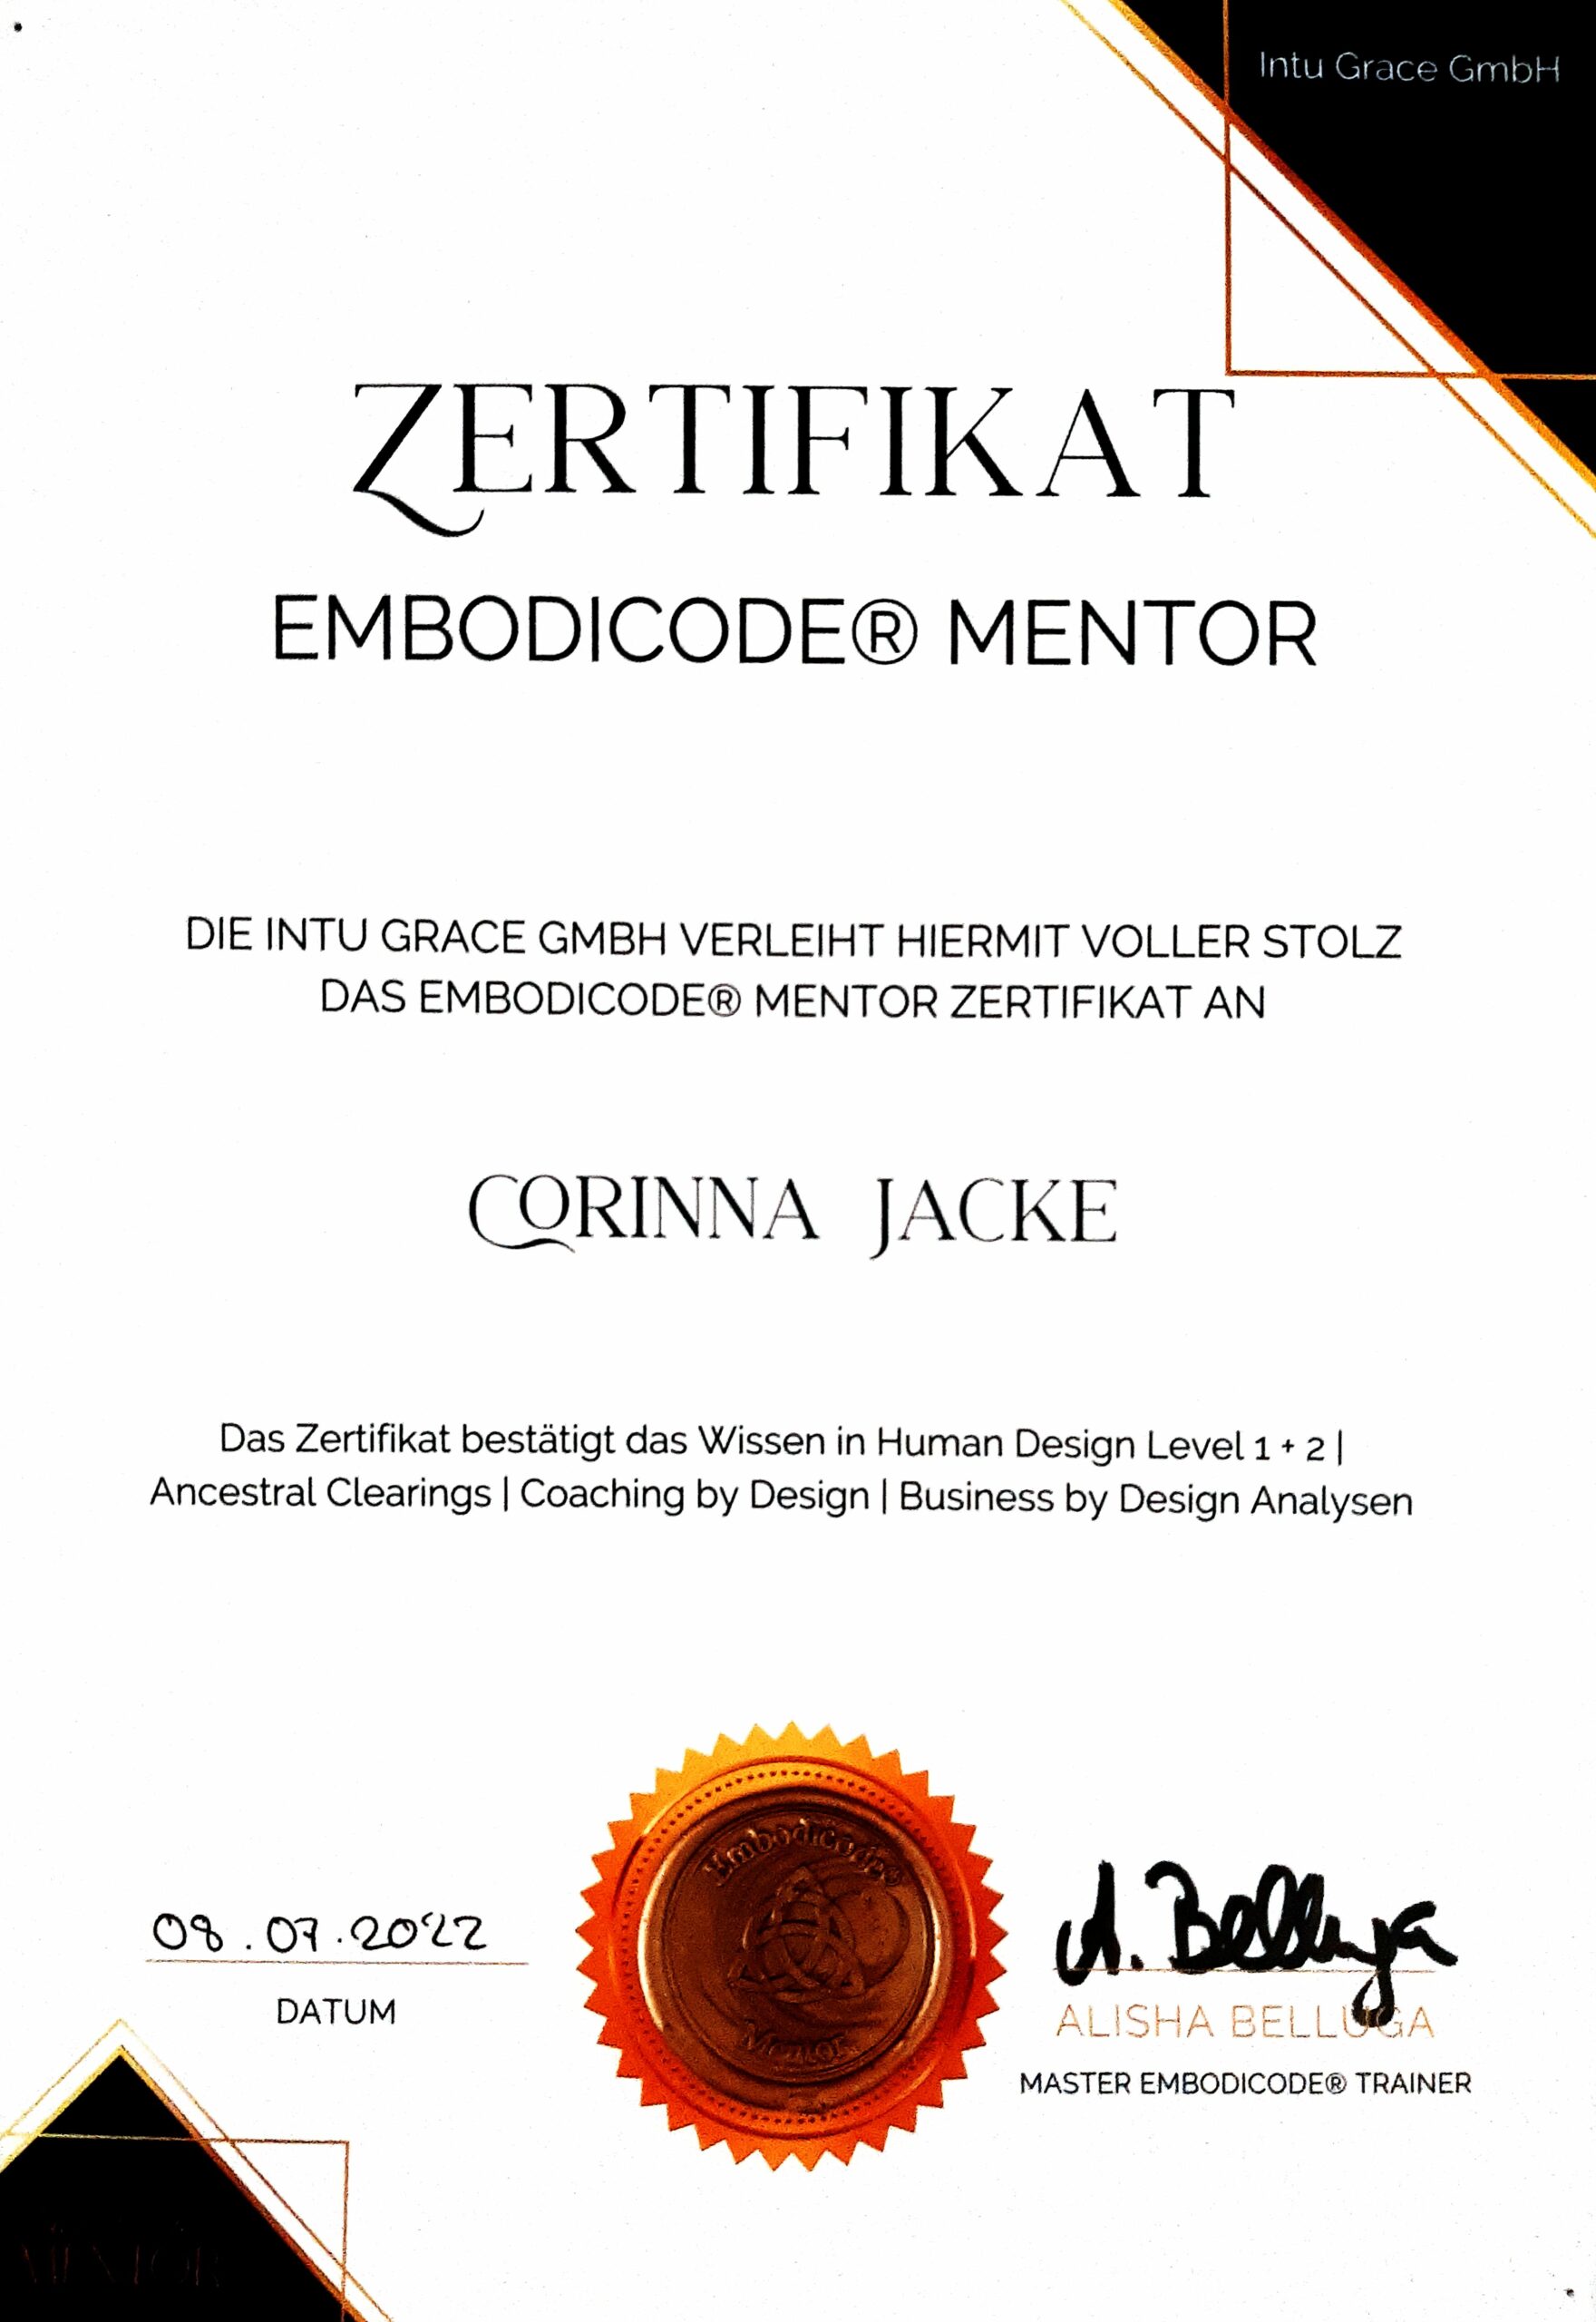 Human Design Mentoring Zertifikat Corinna Jacke